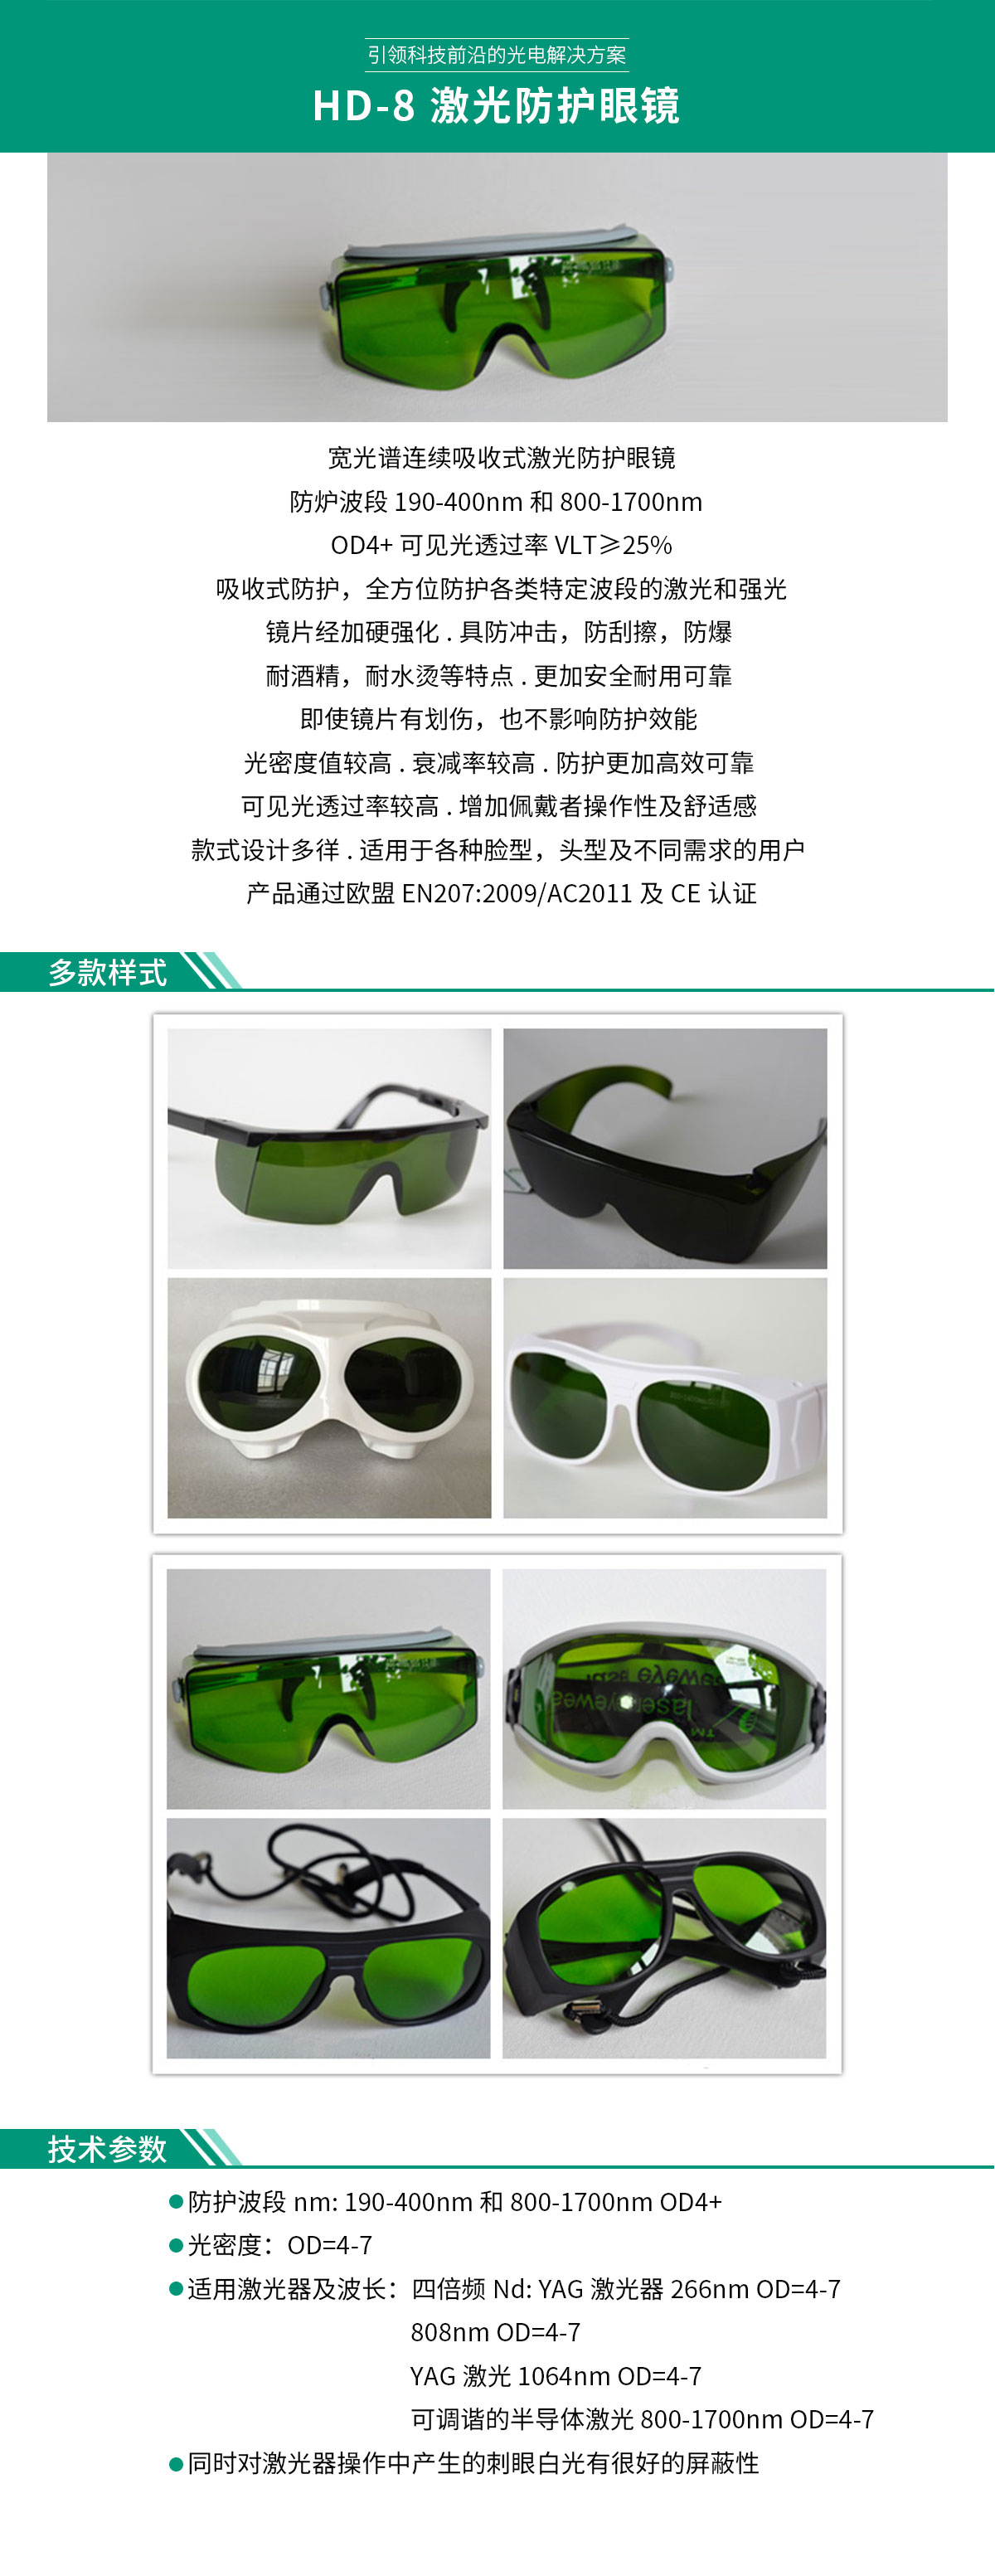 HD-8-激光防護眼鏡